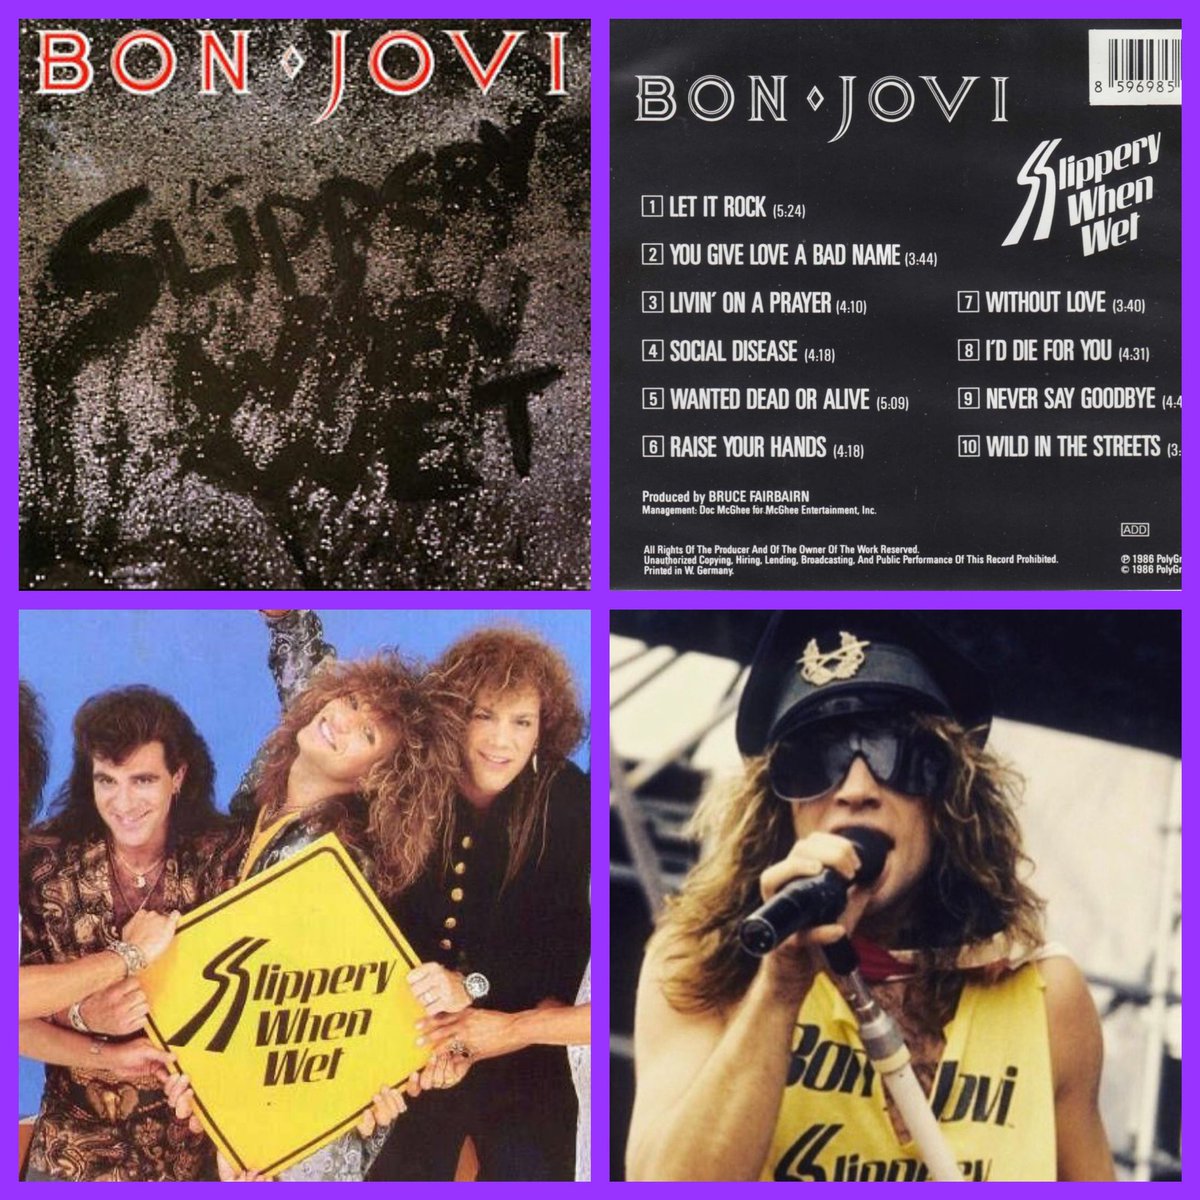 Hace exactamente 37 años, fue el lanzamiento del icónico álbum 'Slippery When Wet' de Bon Jovi💥🔥

#slipperywhenwet #bonjovi #jonbonjovi #slippery #bonjovifans #bonjoviconcert #bonjovitour #newjersey #bonjoviforever #richiesambora #jbjsoulfoundation #jonbonjovifans